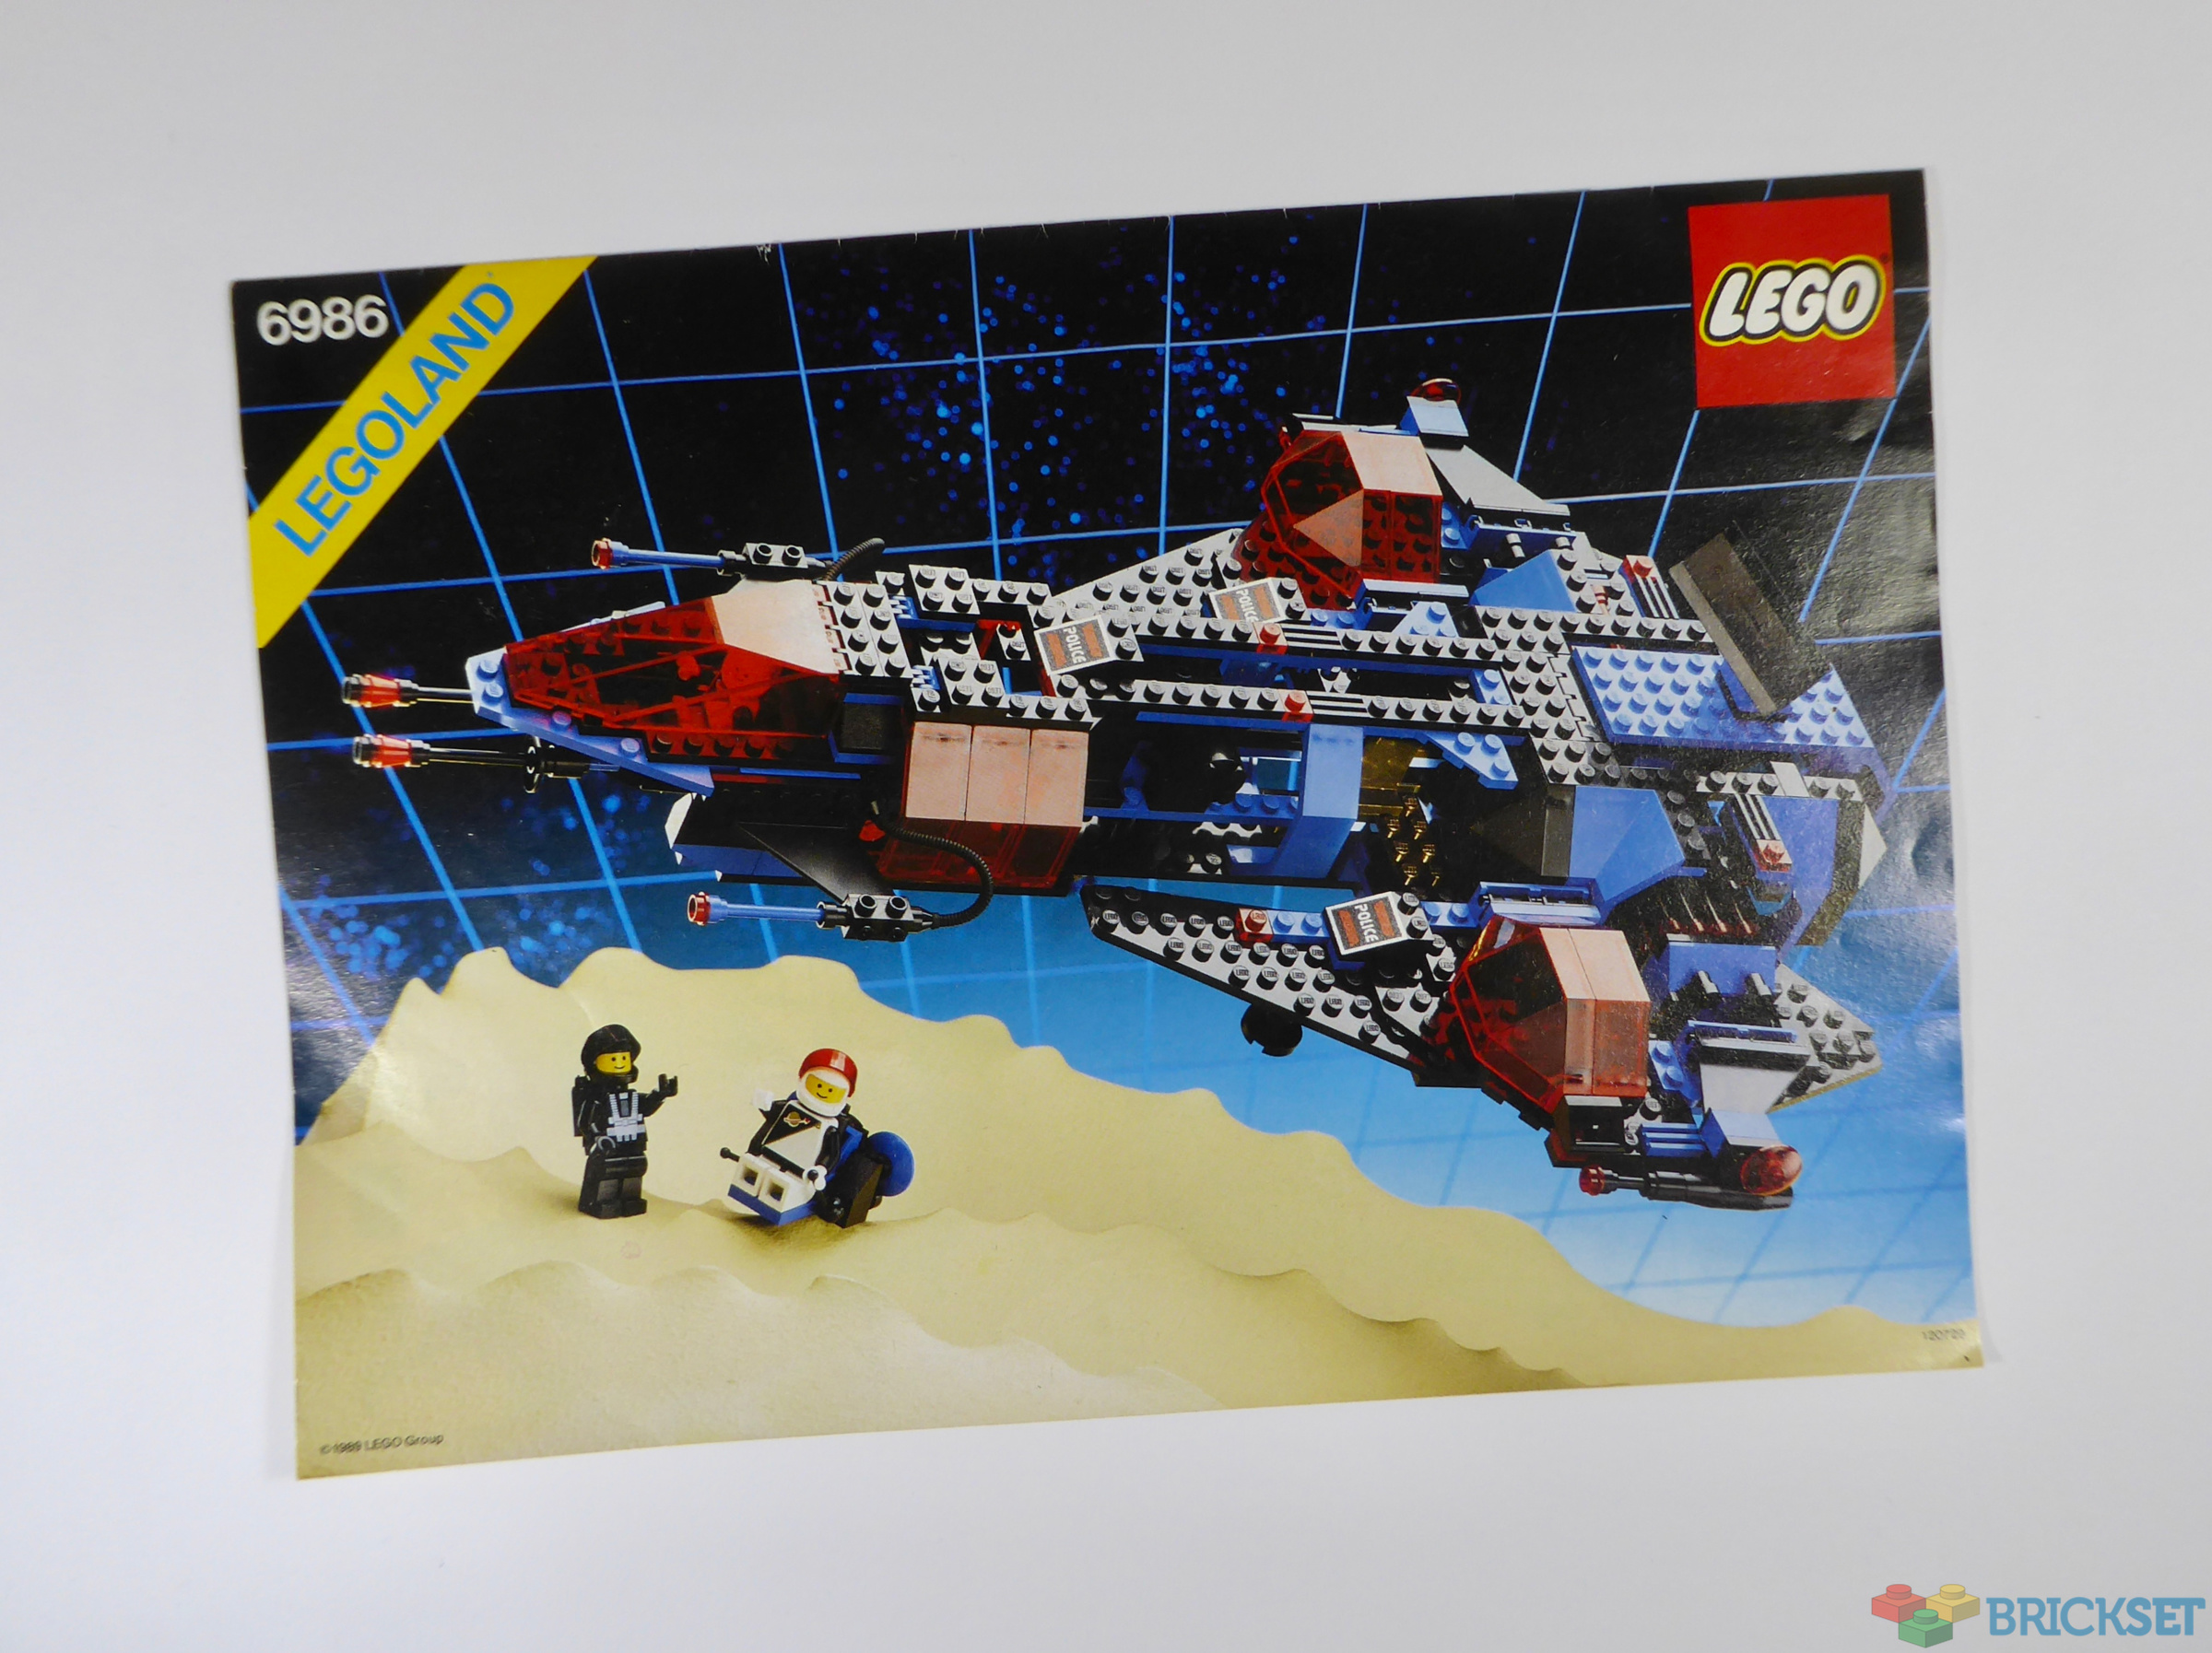 melodi Komedieserie Slik LEGO #ThrowbackThursday 6986 Space Police Mission Commander review |  Brickset